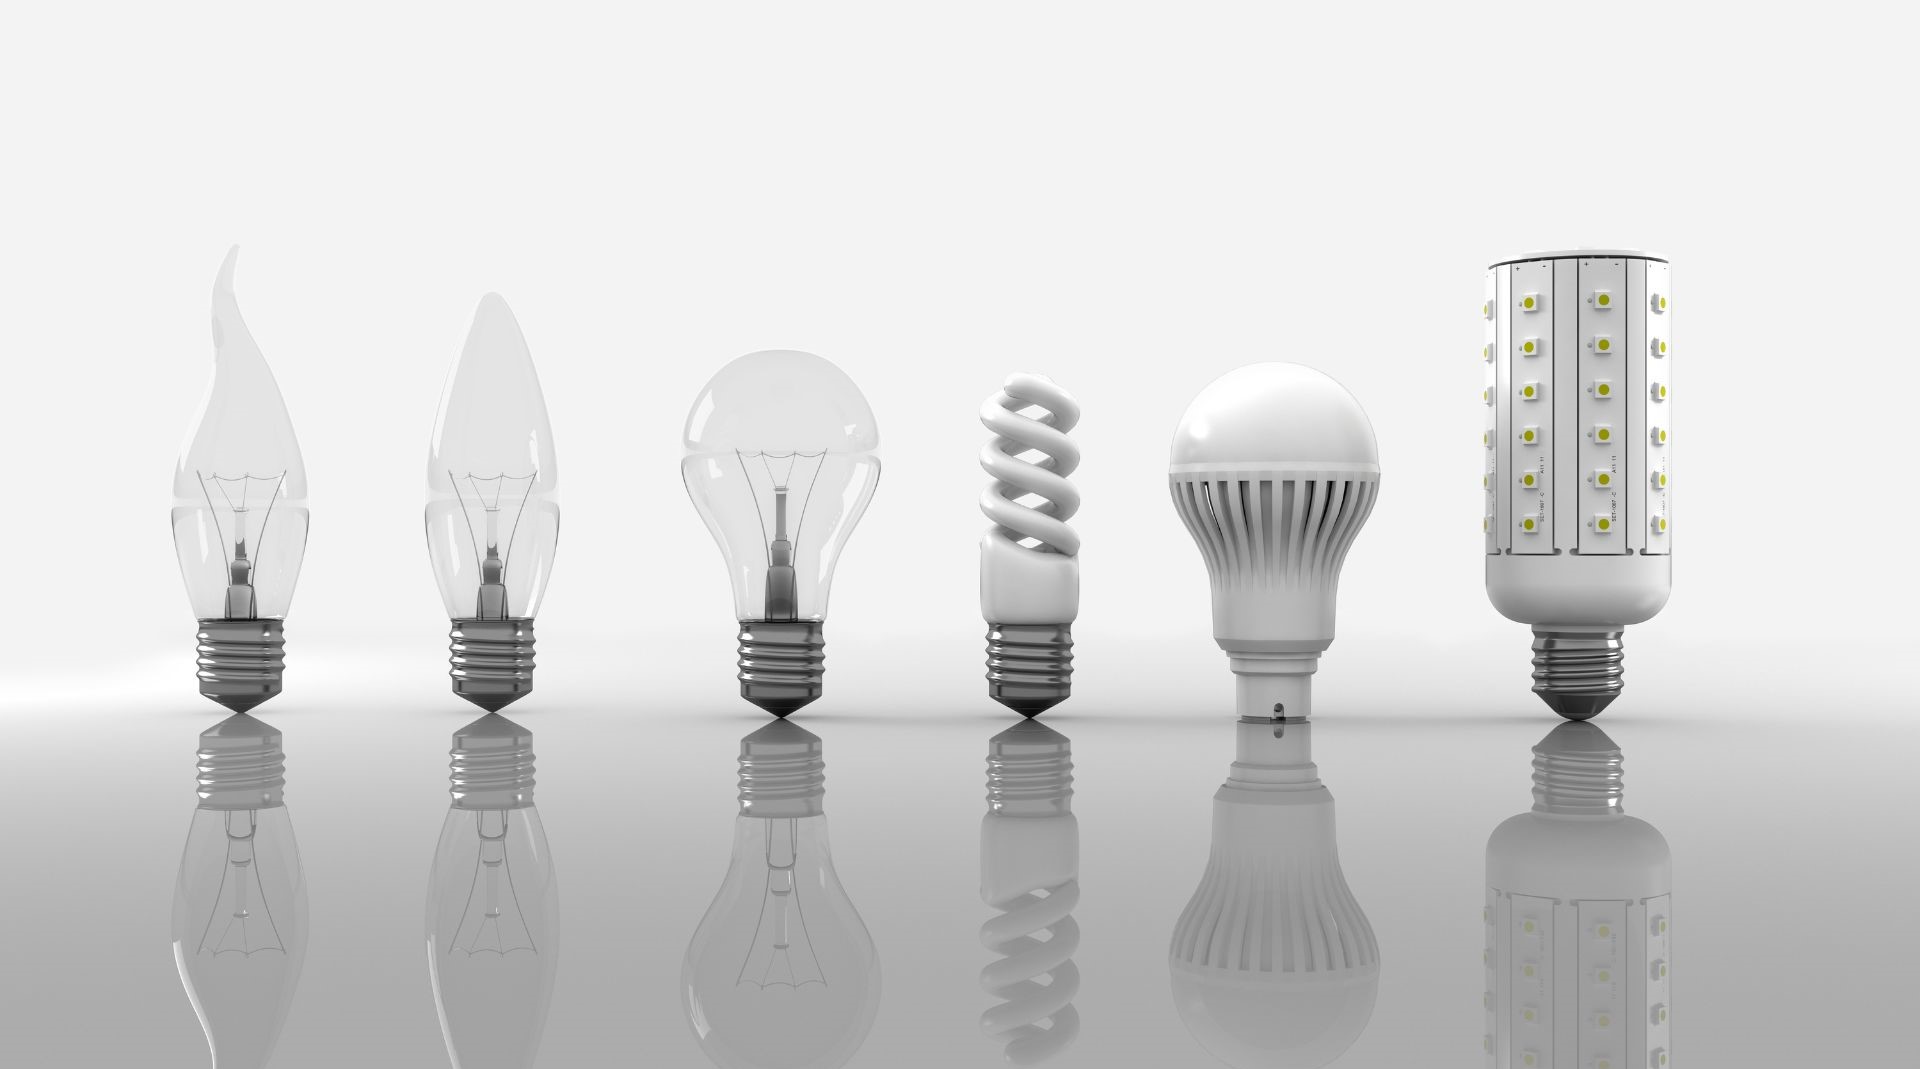 Evolution of light bulbs with six bulbs on a white surface